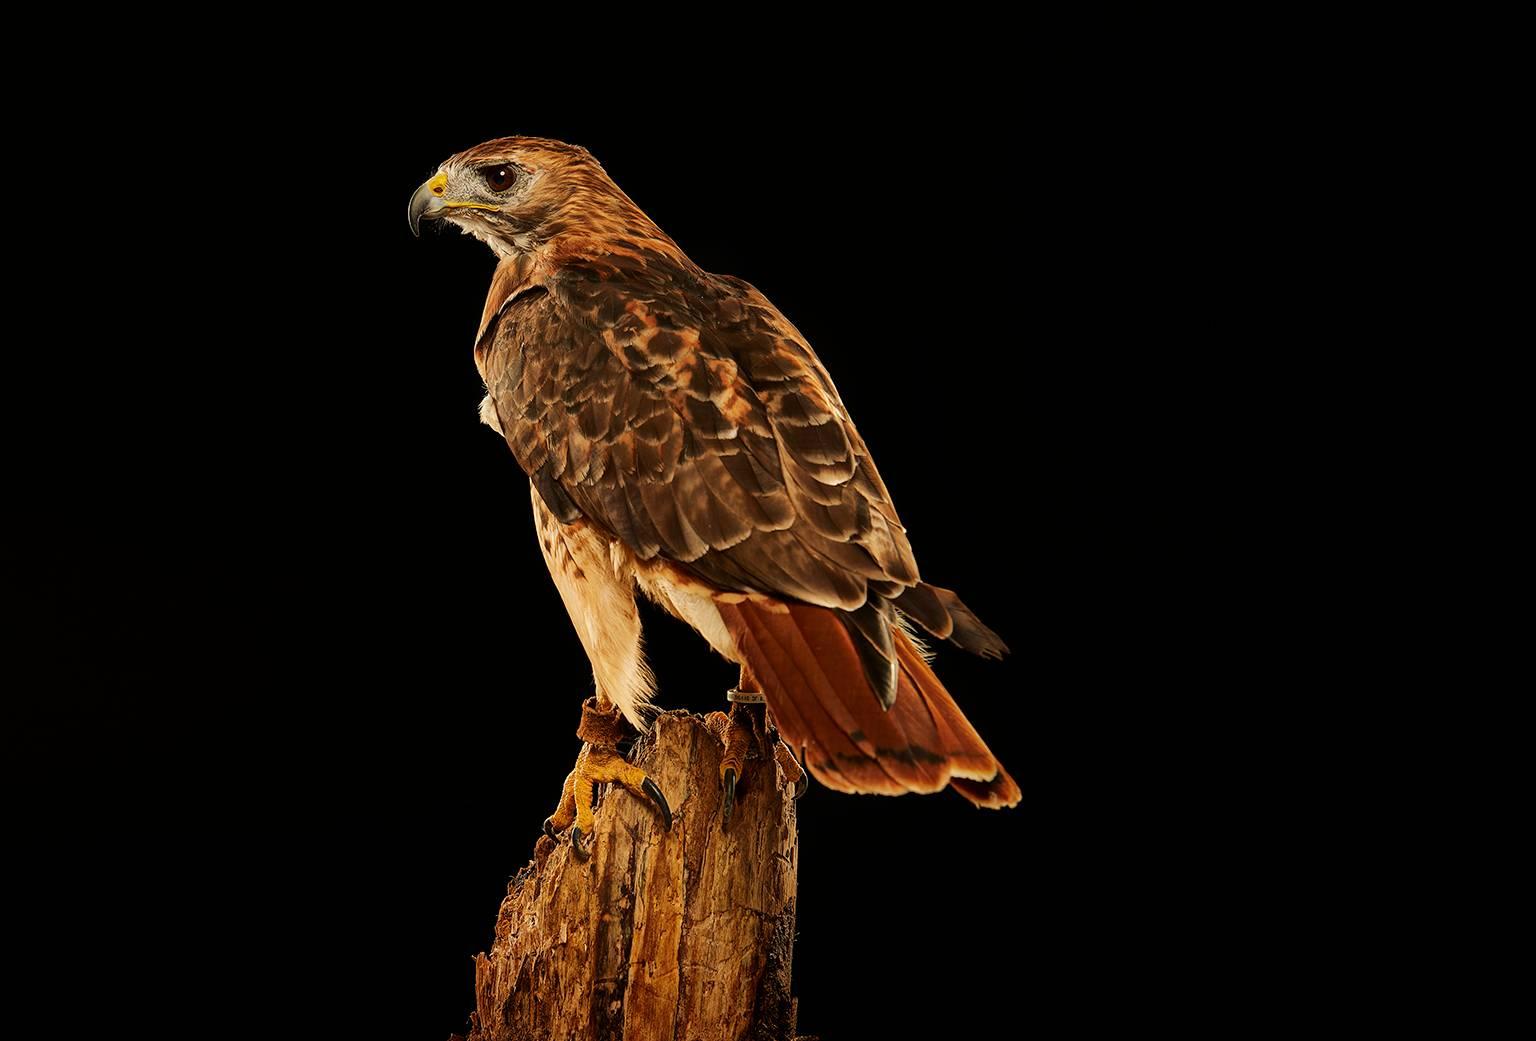 Chris Gordaneer Color Photograph - Birds of Prey Red Tailed Hawk No.3